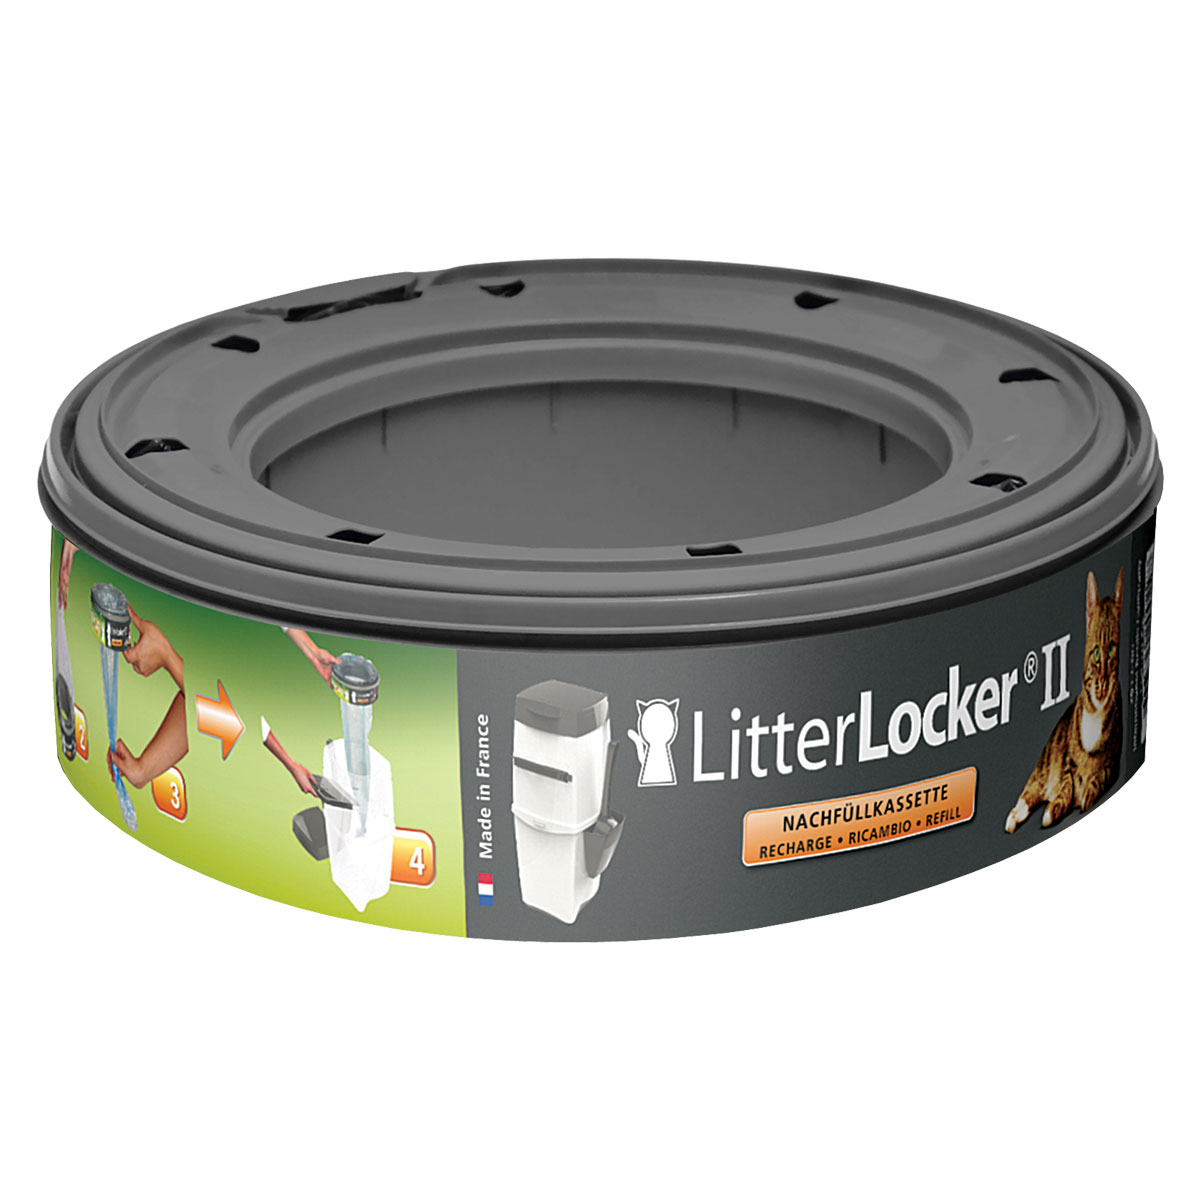 LitterLocker II – Nachfüllkassette 6 Stück